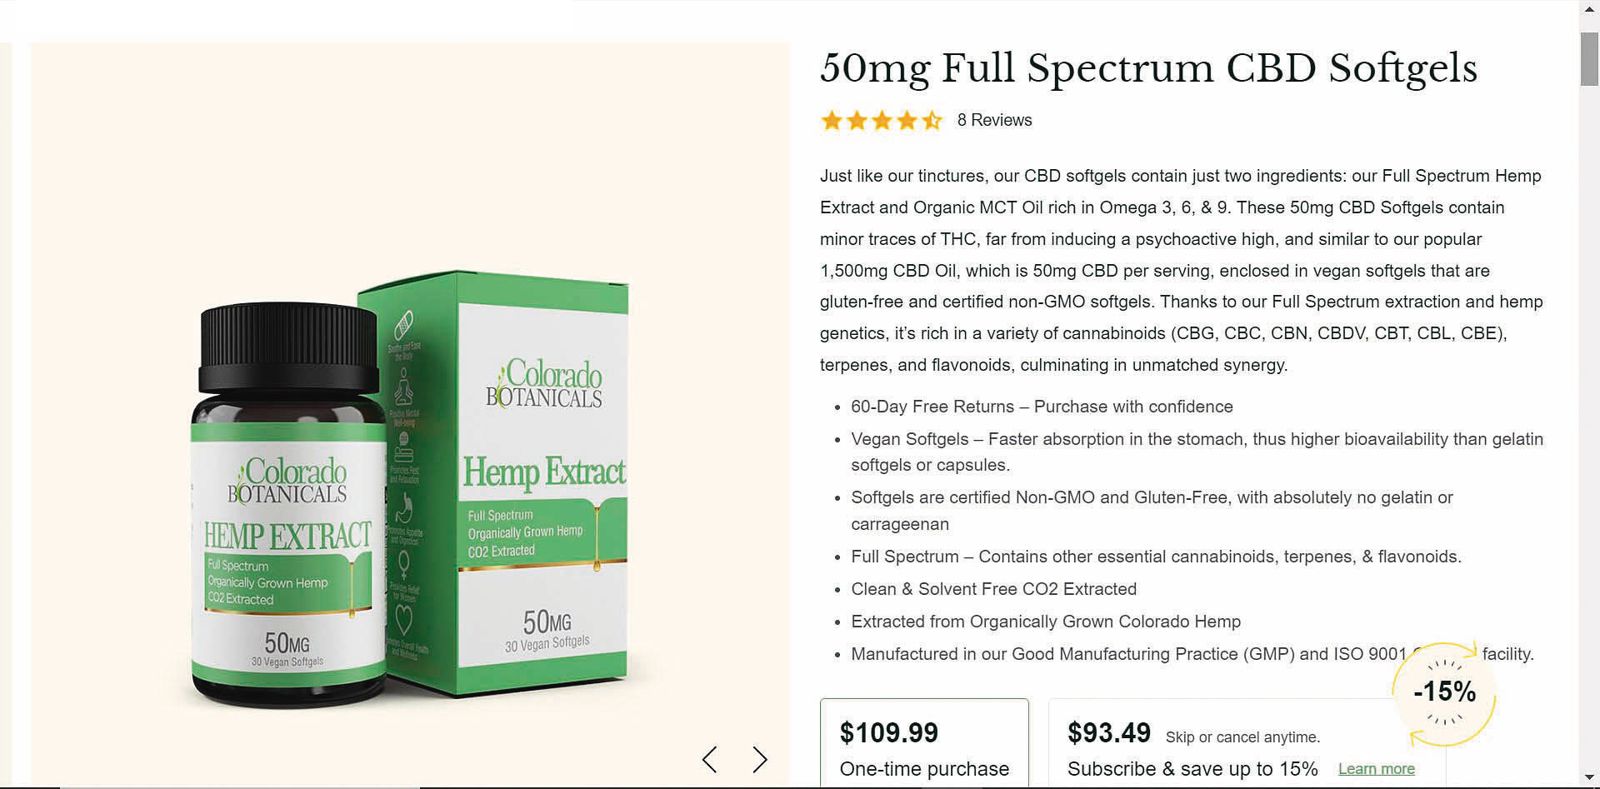 「Colorado Botanicals」的「Hemp Extract」膠囊含有大麻，也是殷琪買的物品。（圖／讀者提供）